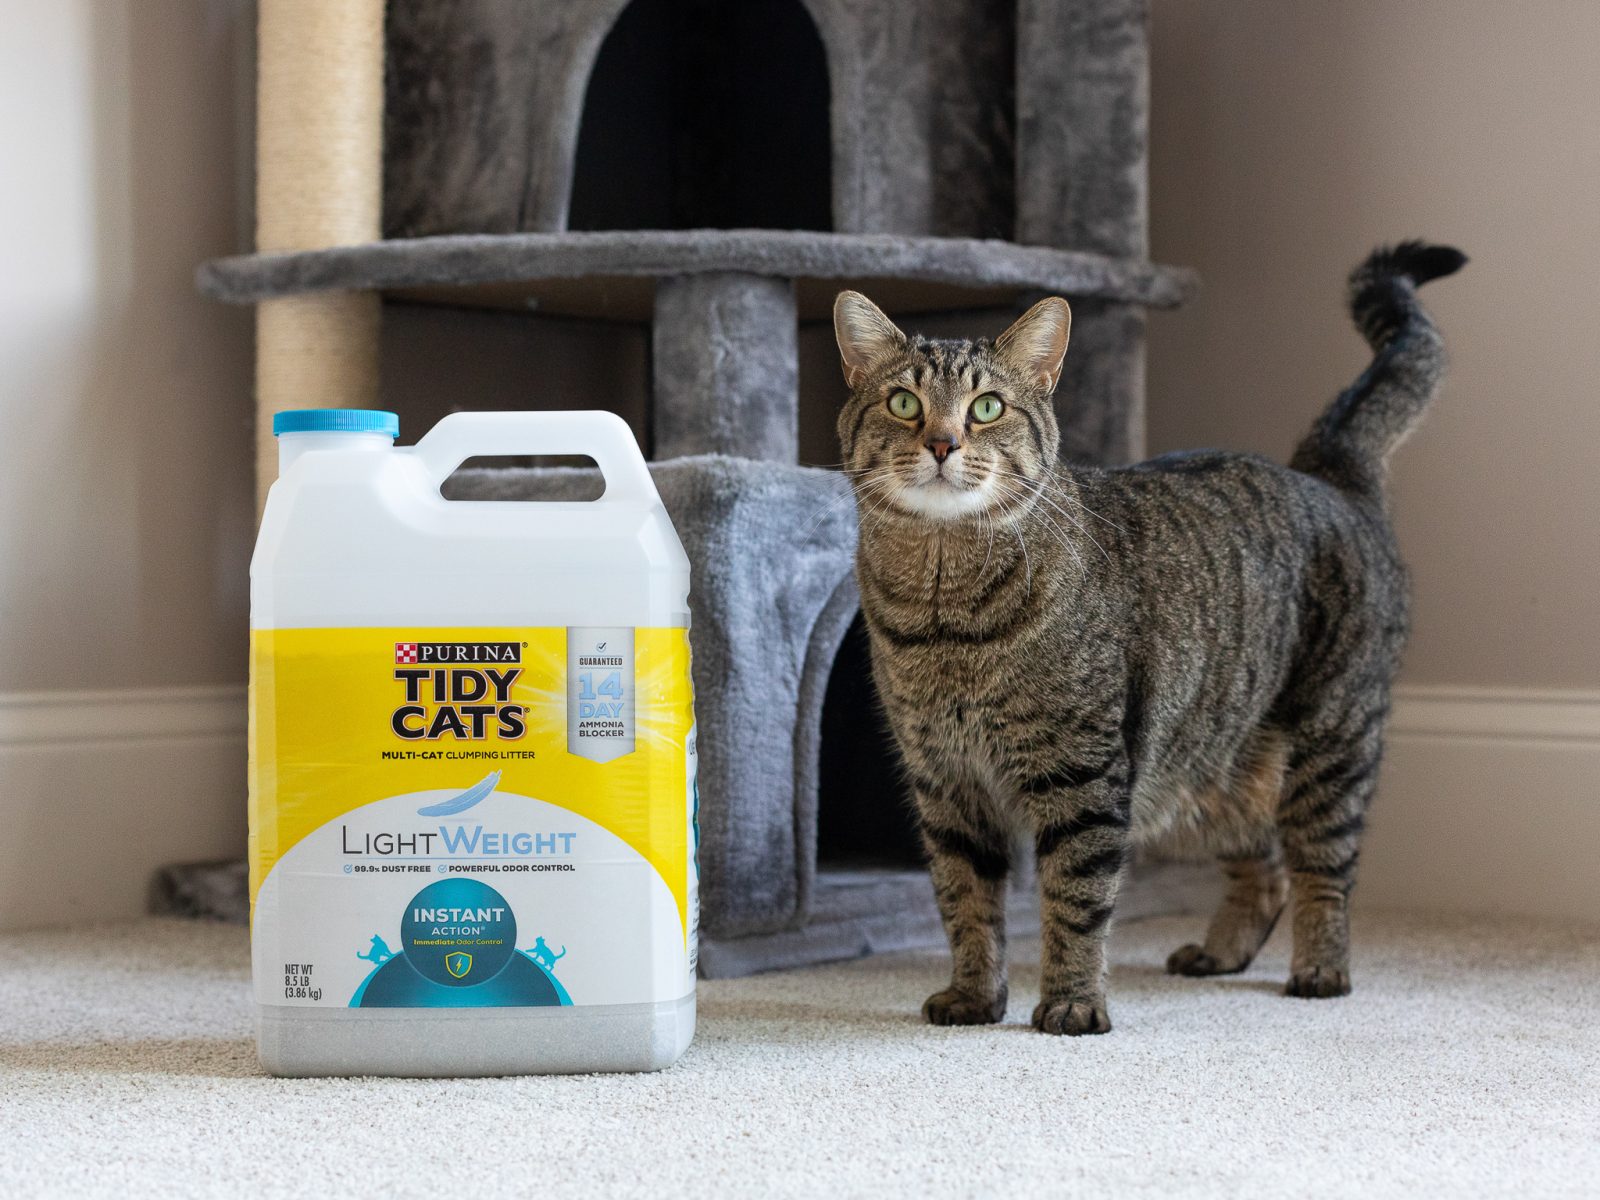 Purina Tidy Cats Clumping Litter Just $6.70 At Publix (Regular Price $15.39)